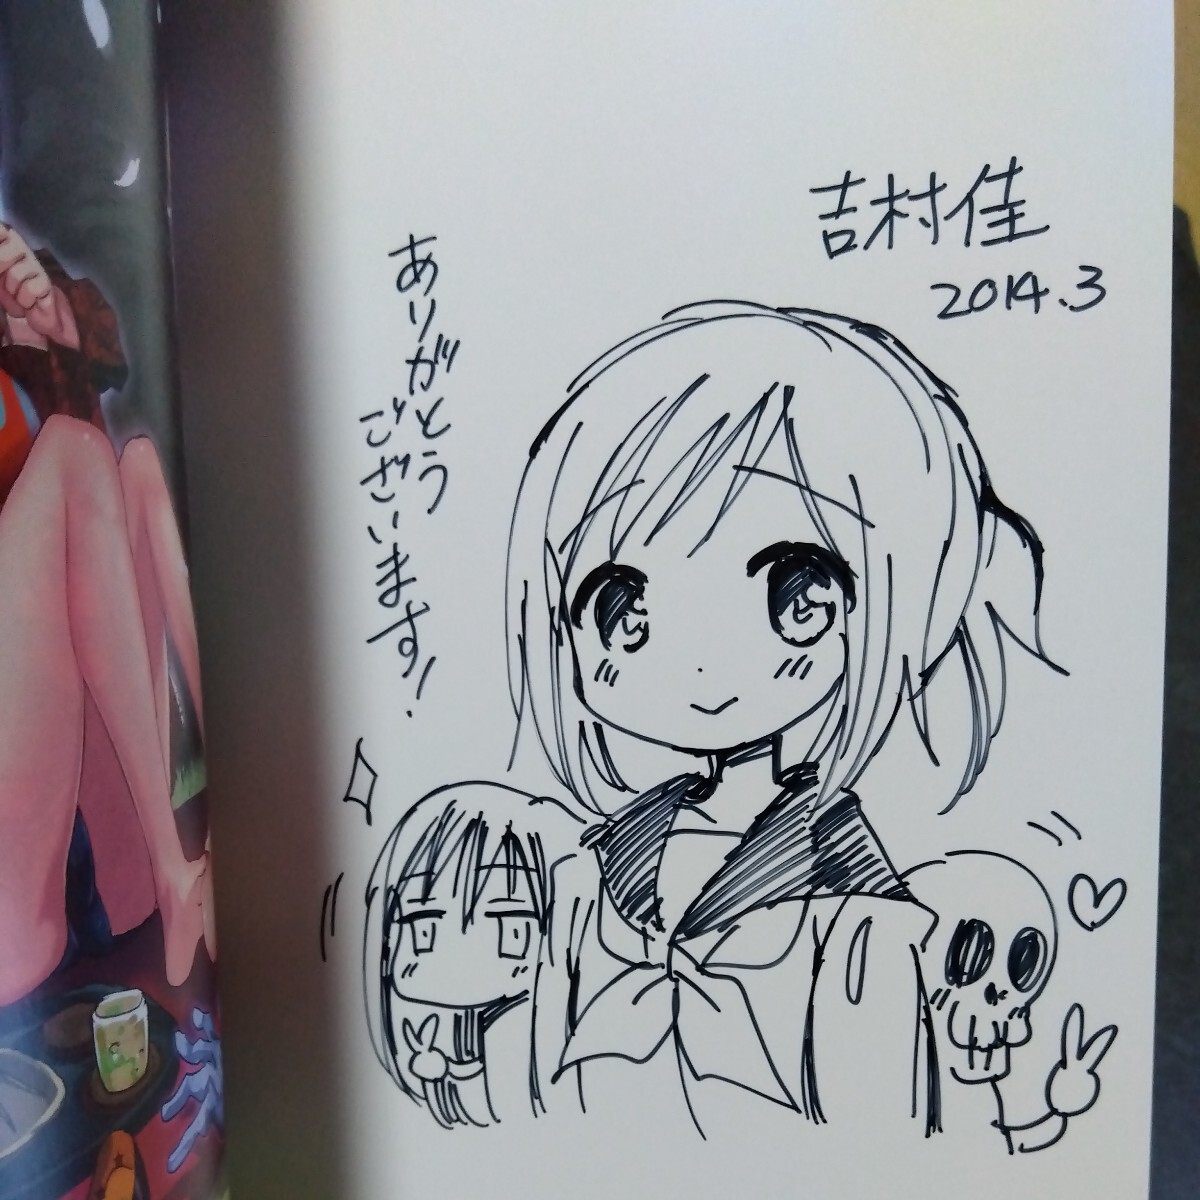  autograph illustration go in autograph book@.....- Yoshimura .